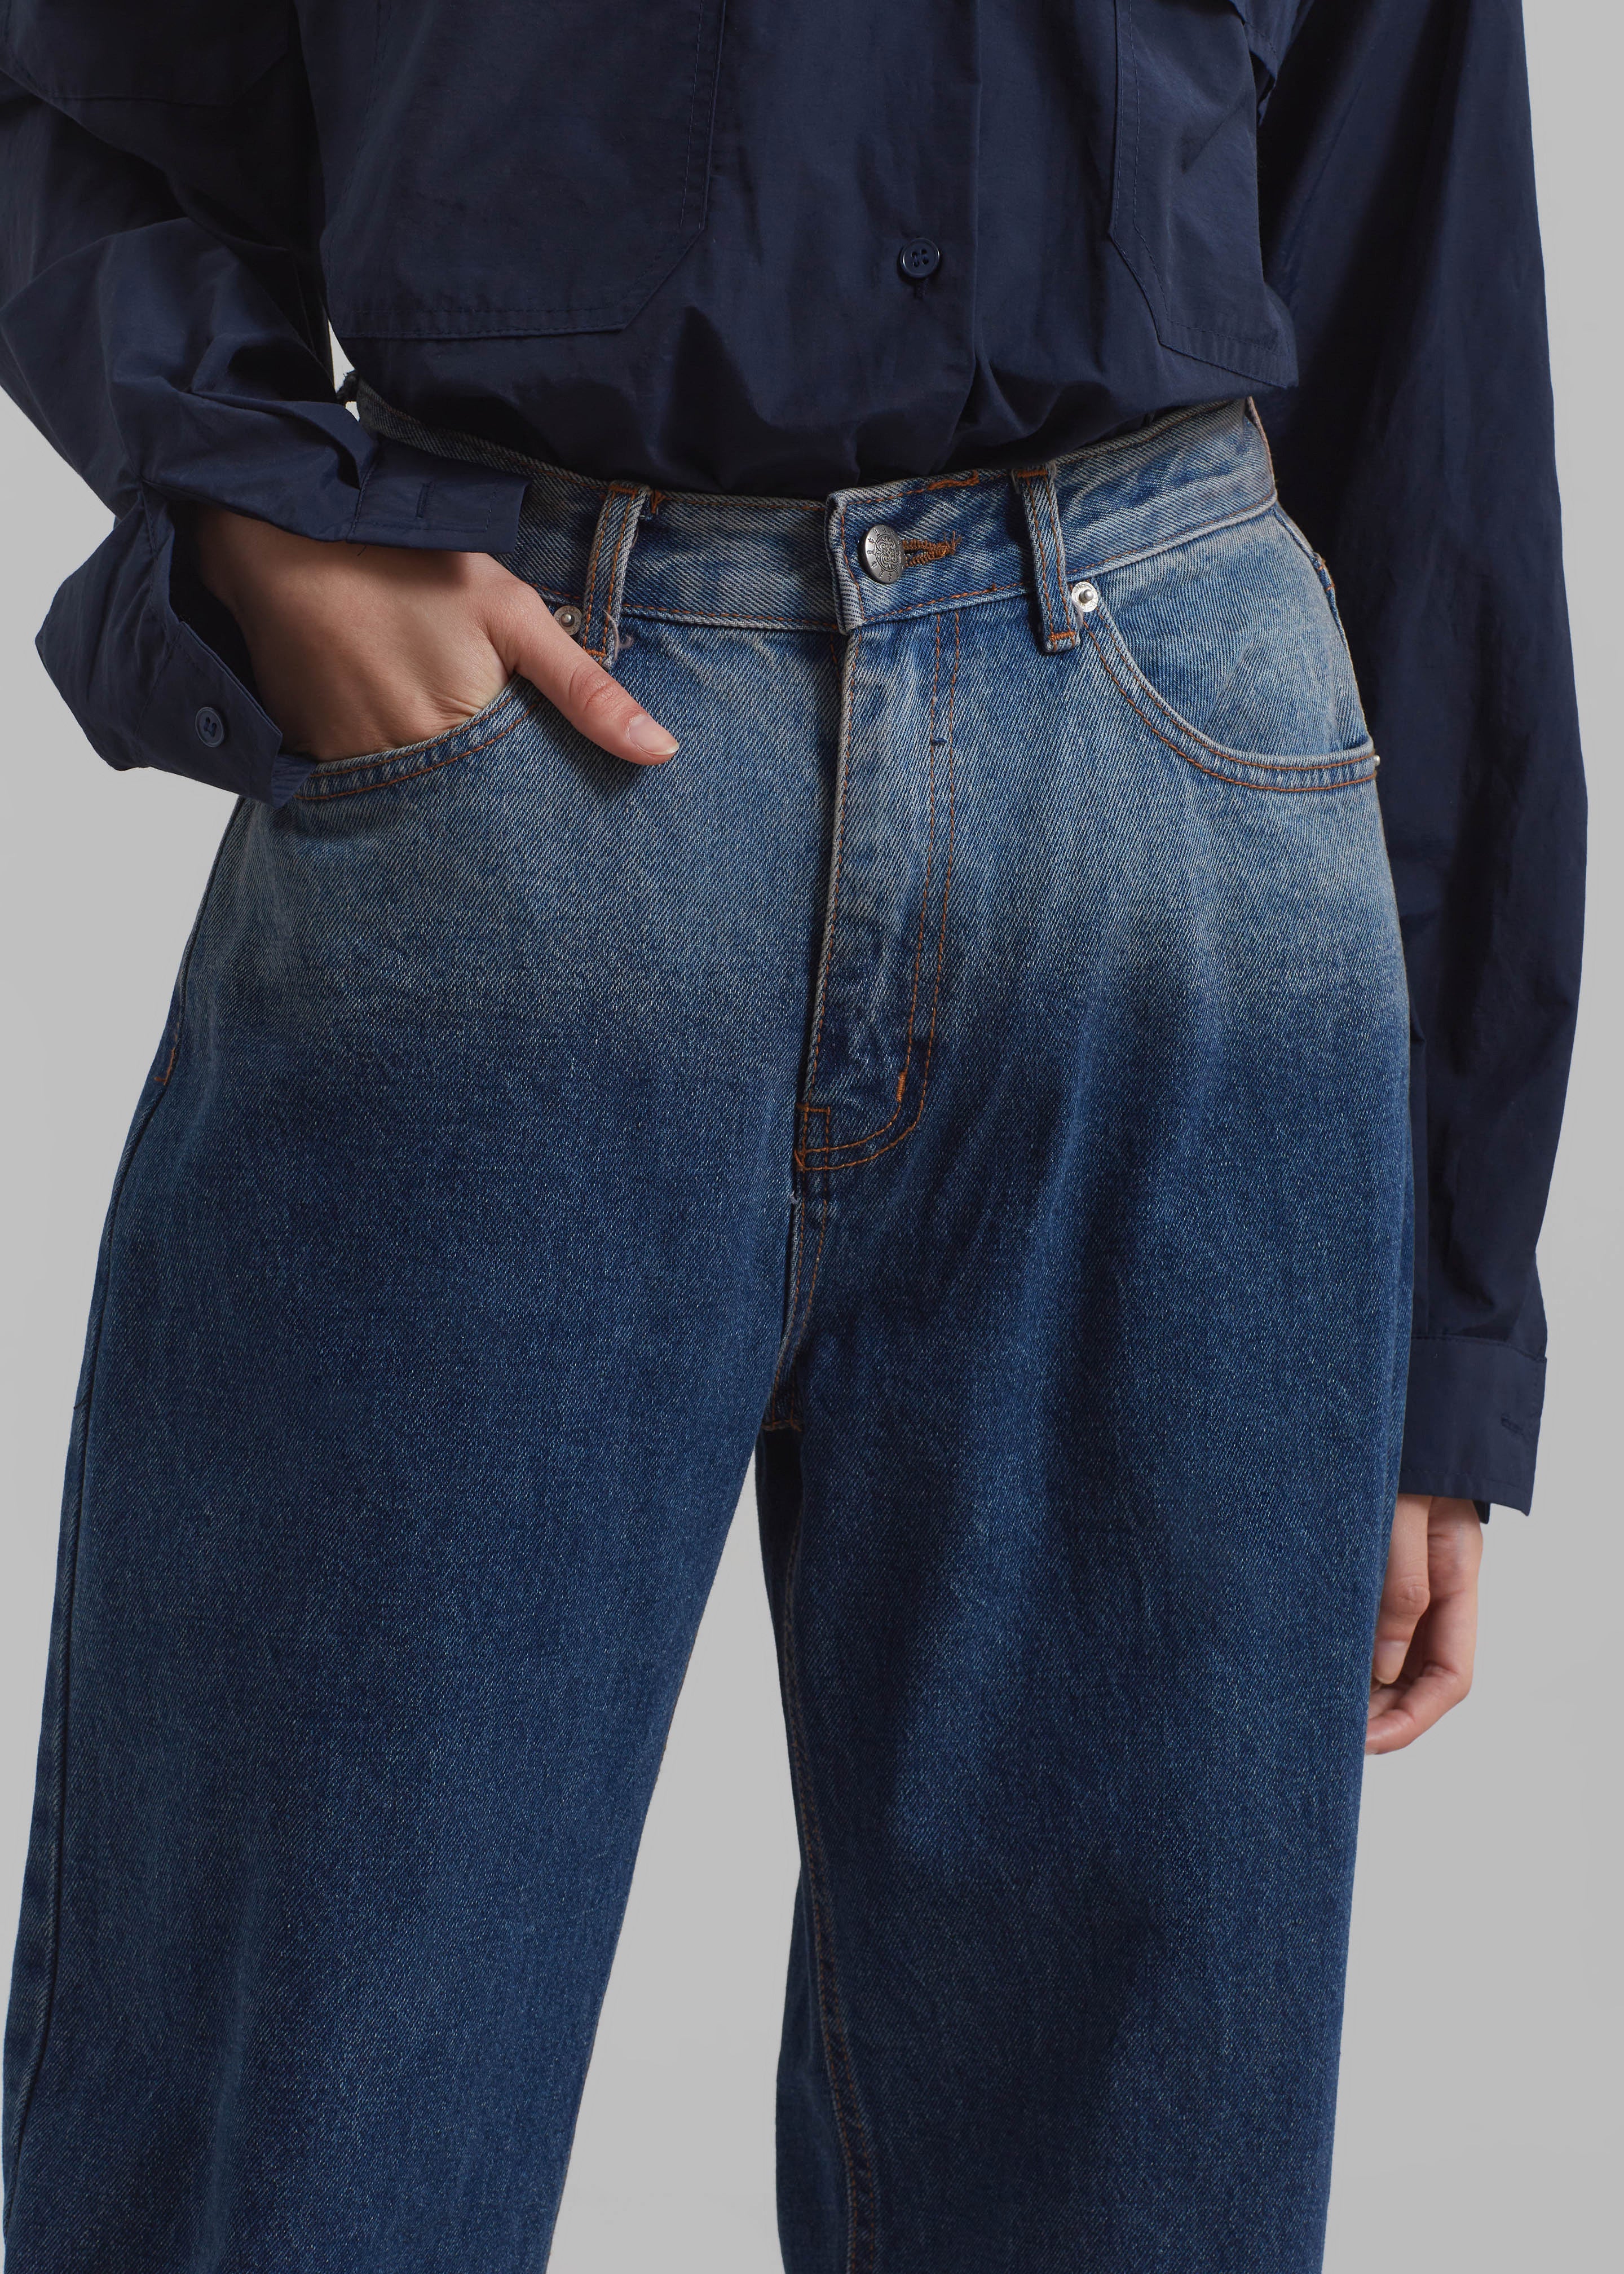 Myla Ombre Jeans - Medium Wash - 3